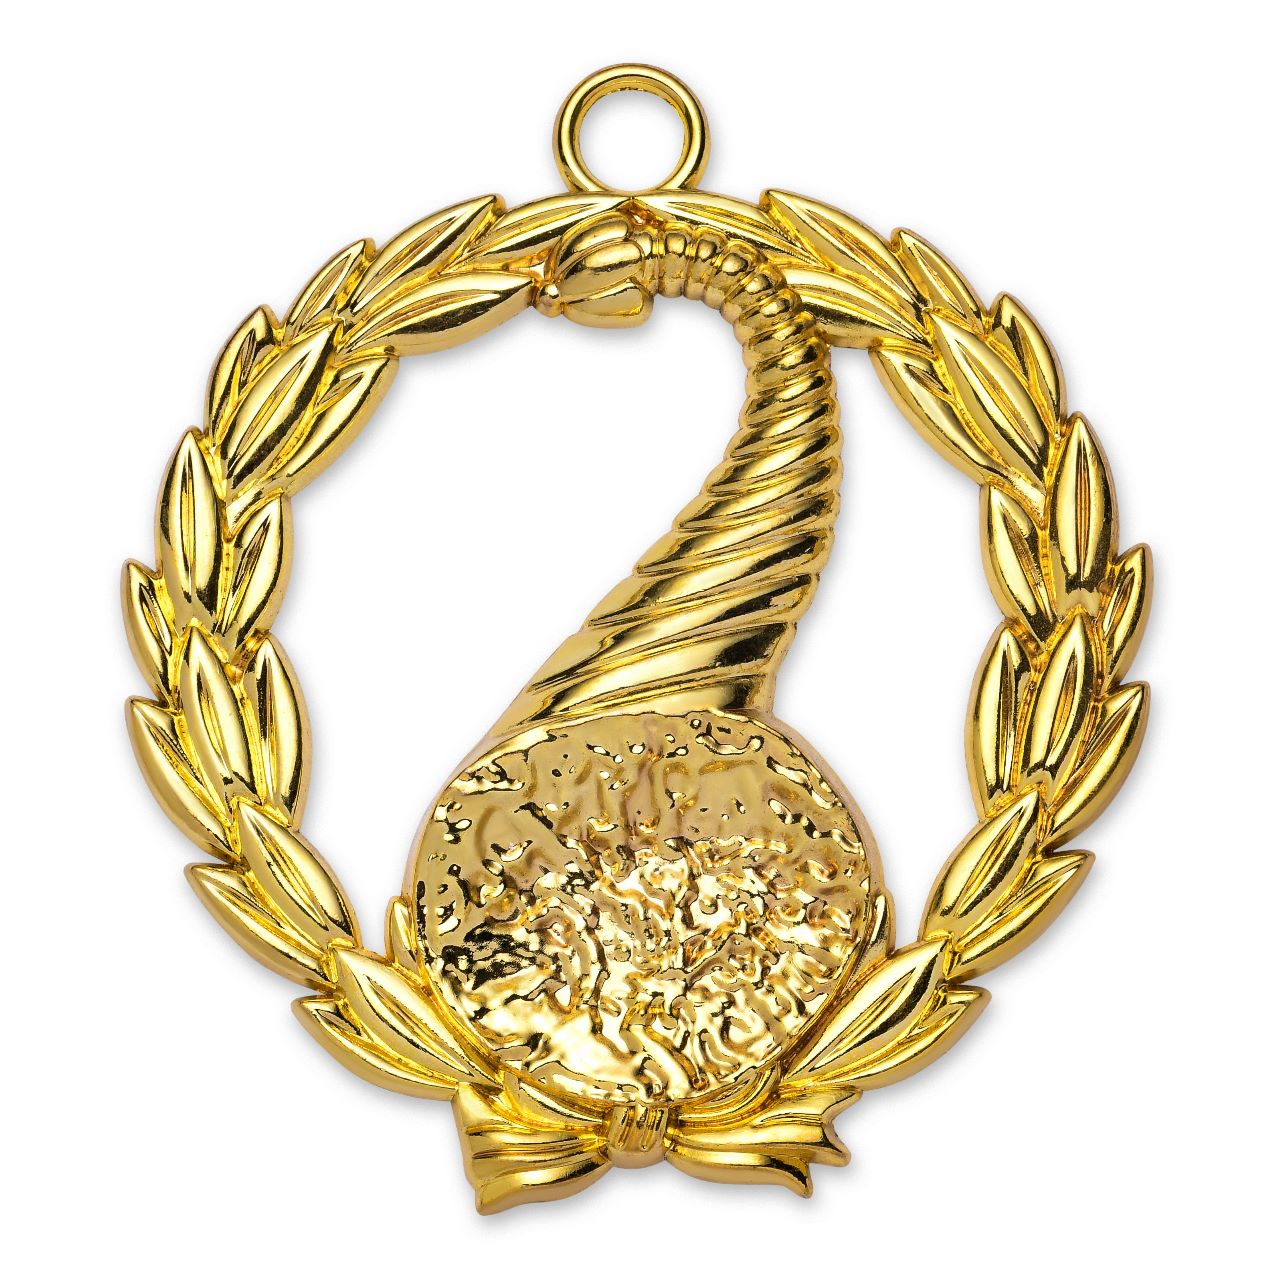 Junior Steward Blue Lodge Grand Officer Collar Jewel - Gold Plated - Bricks Masons